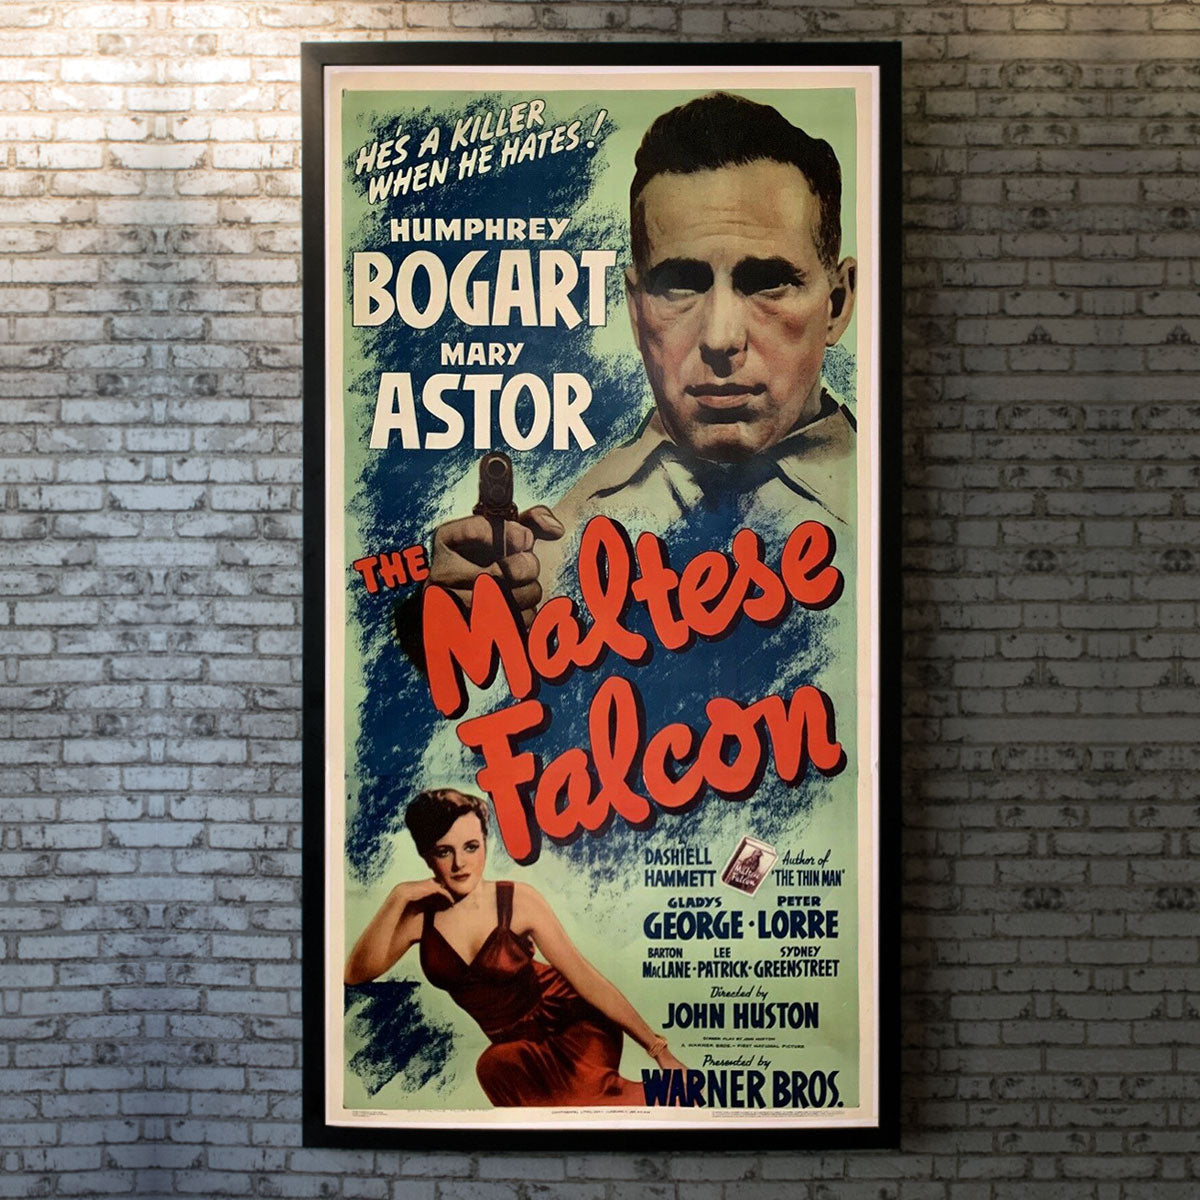 Maltese Falcon, The (1941)